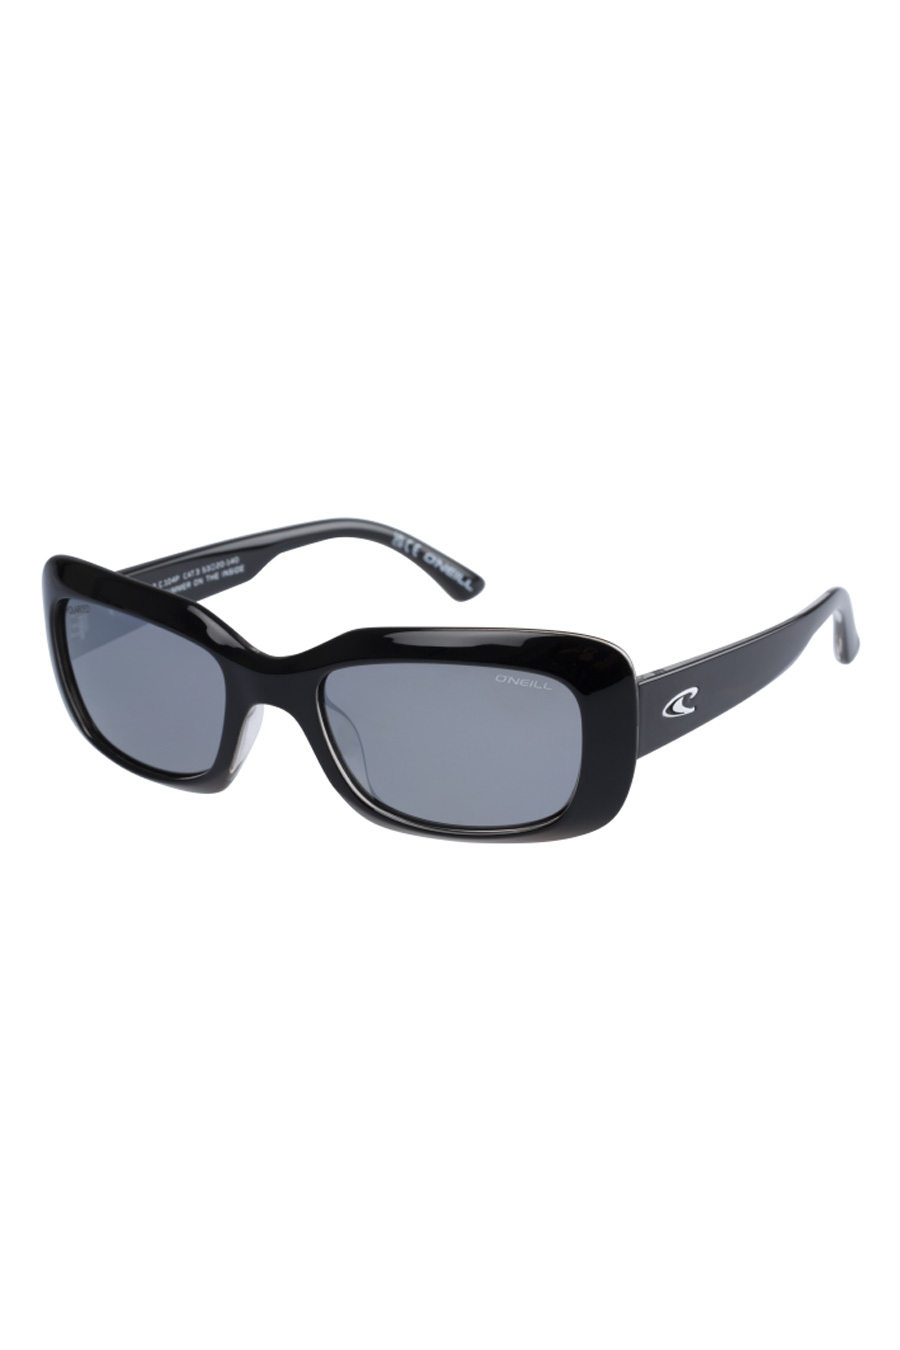 Sunglasses ONEILL ONS-9012-20-104P